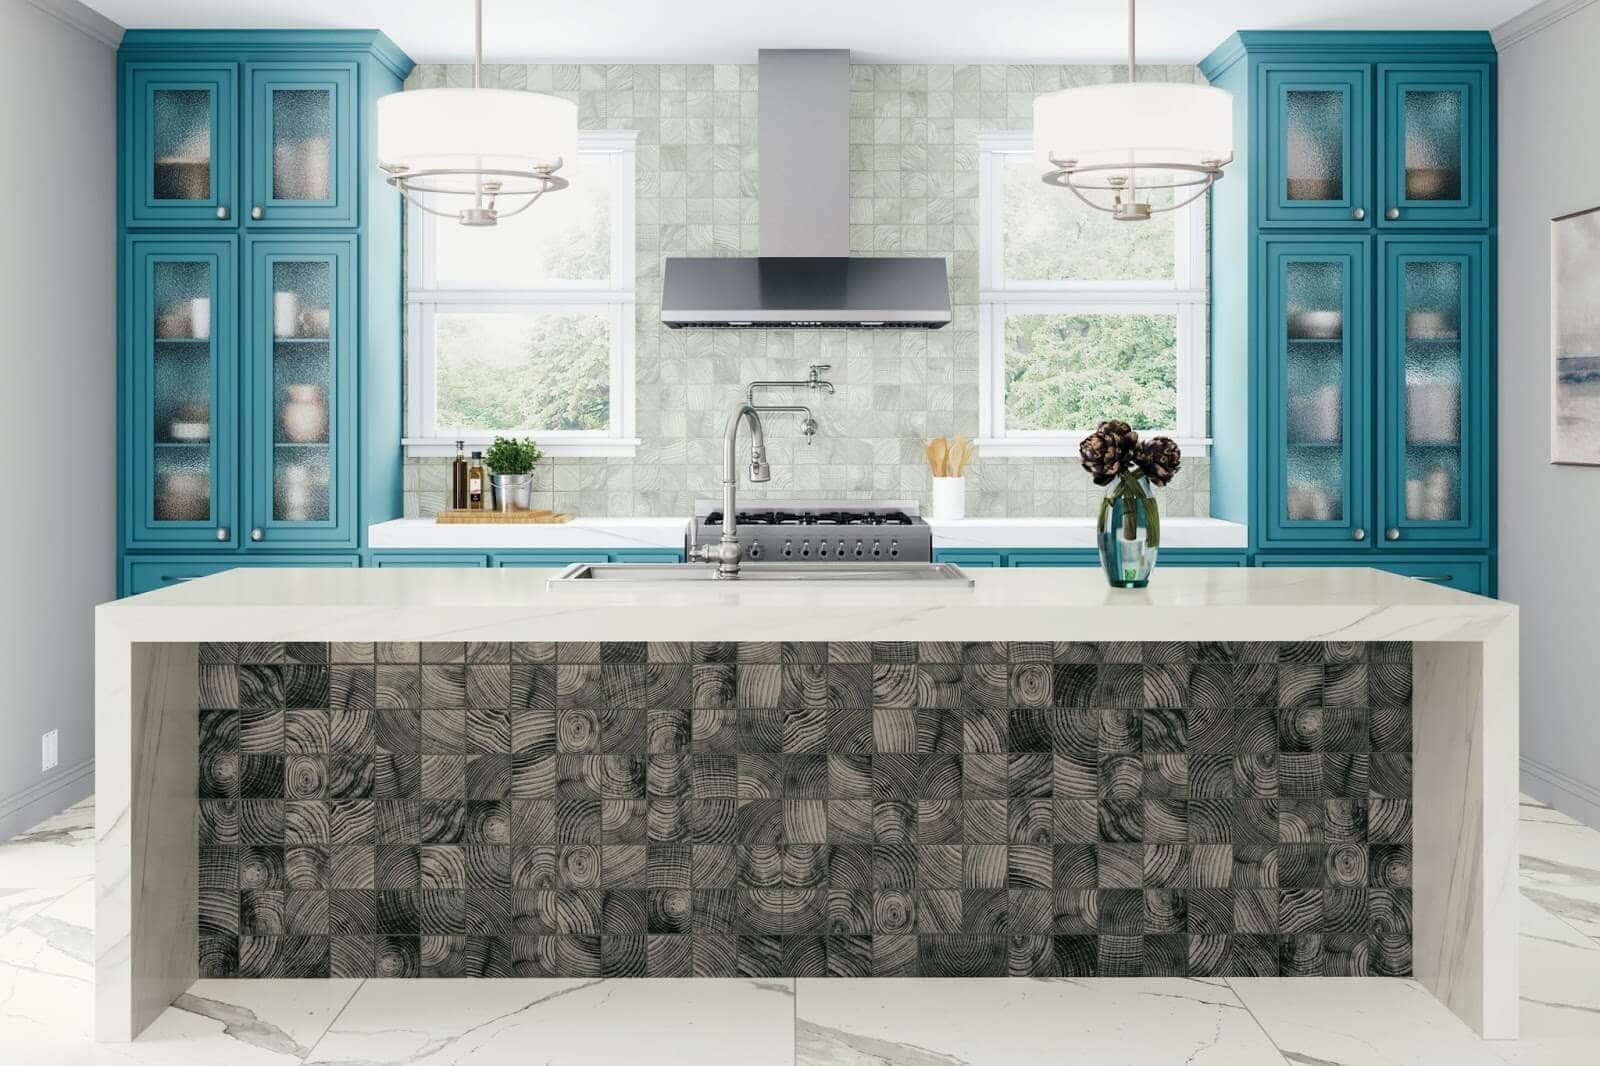 Colorful kitchen and white center island with backsplash dark tile